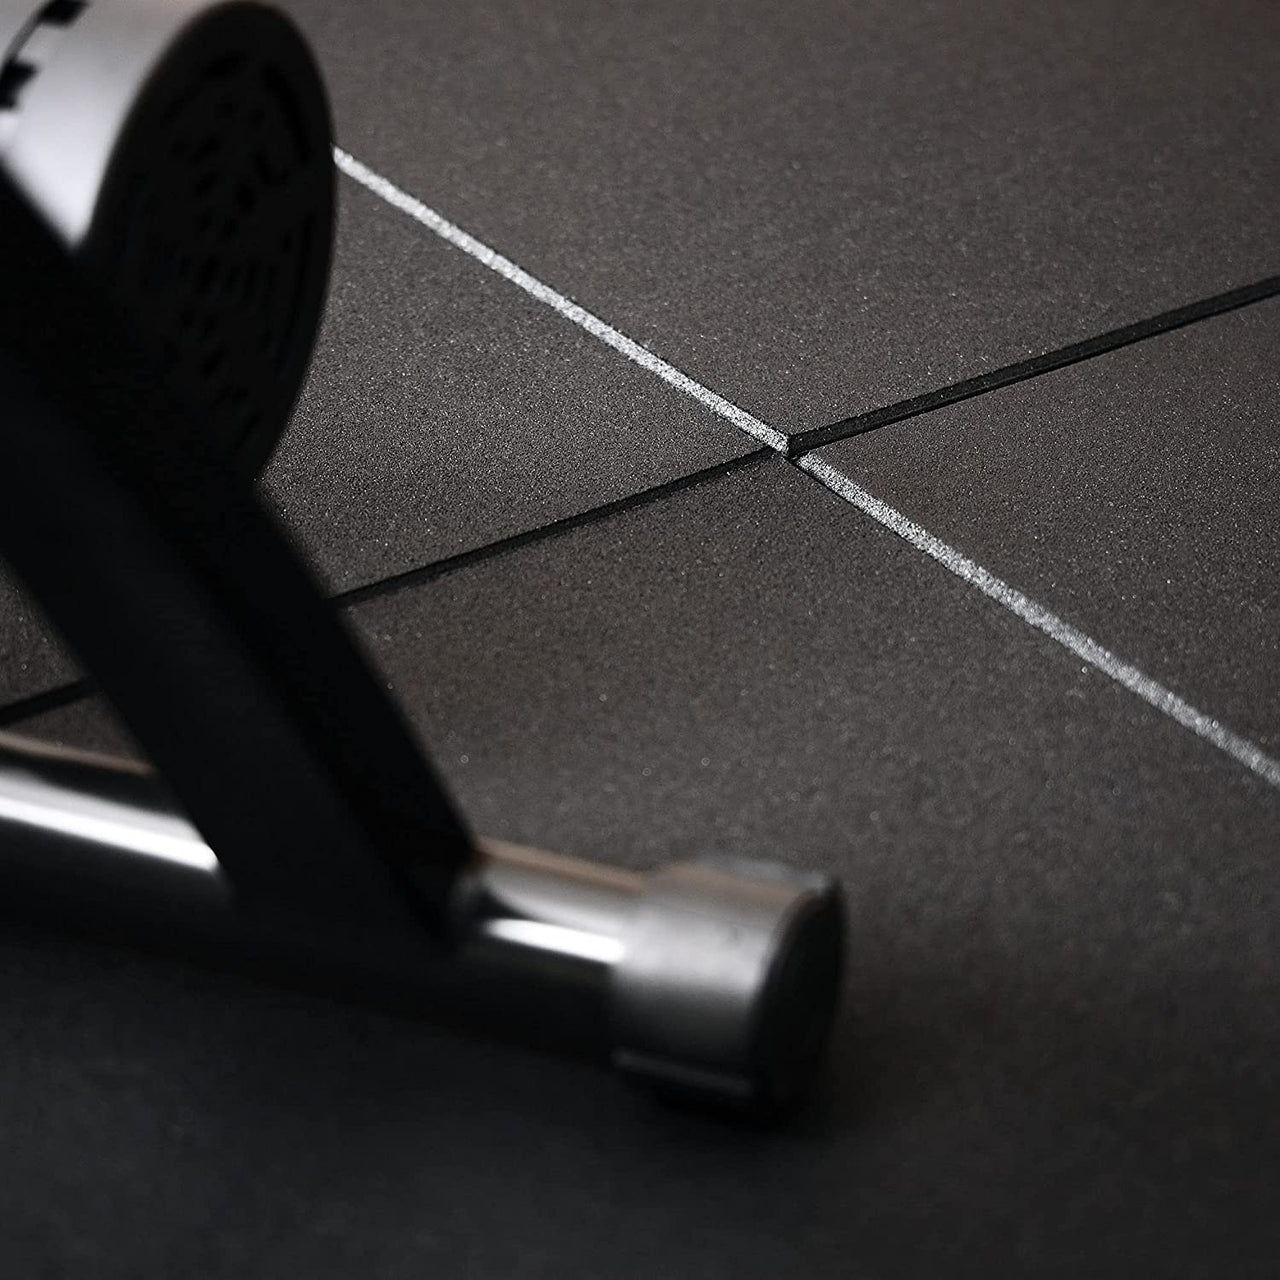 1441 Fitness Heavy Duty Gym Tile 15 mm - 100 x 100 CM | Rubber Flooring